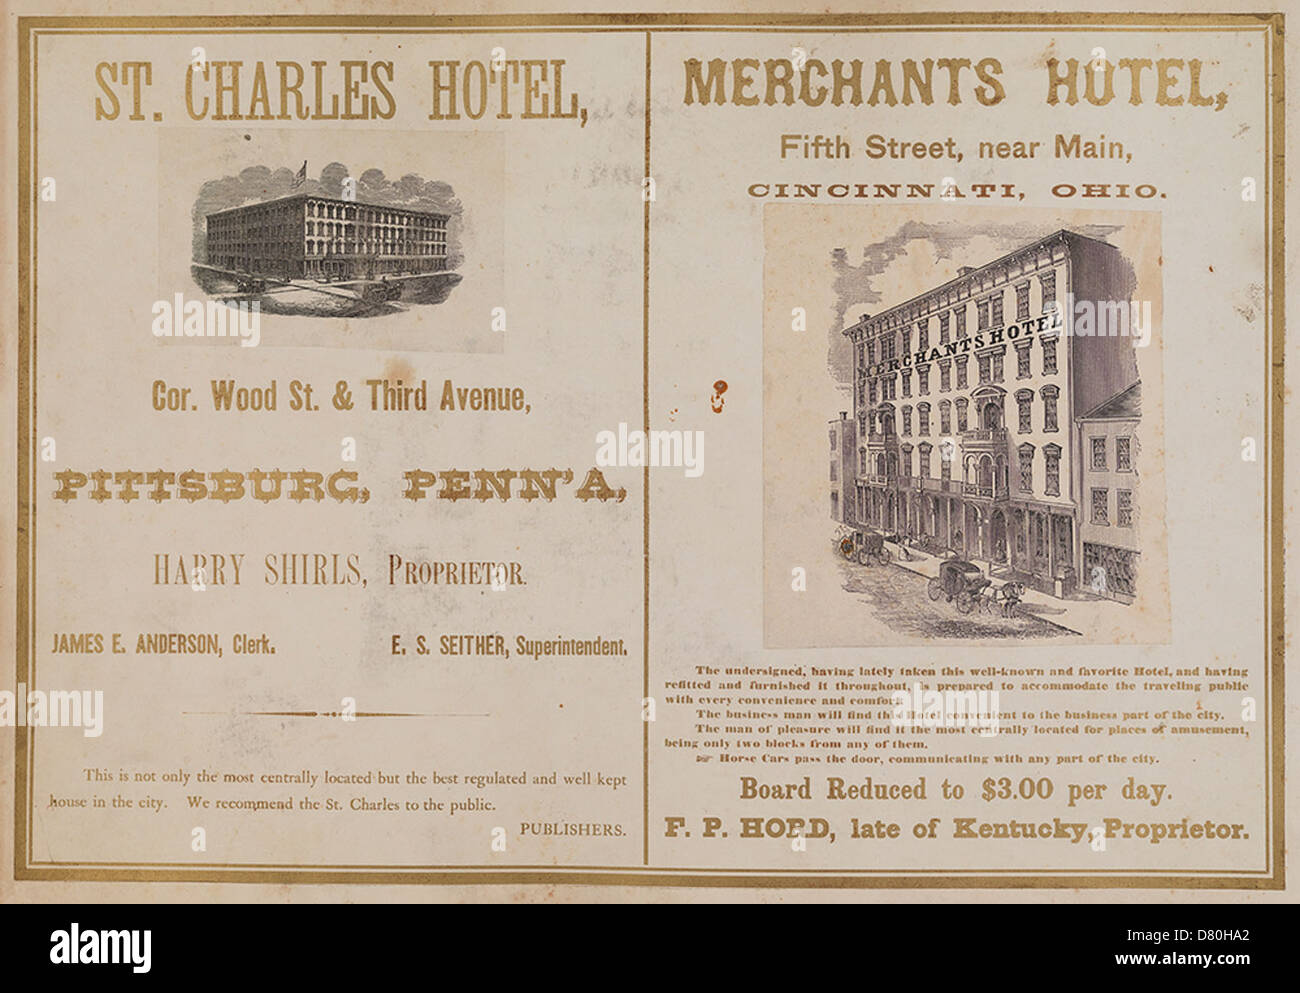 Hôtel Saint Charles, Pittsburg., Penn'a ; Merchants Hotel, Cincinnati, Ohio Banque D'Images